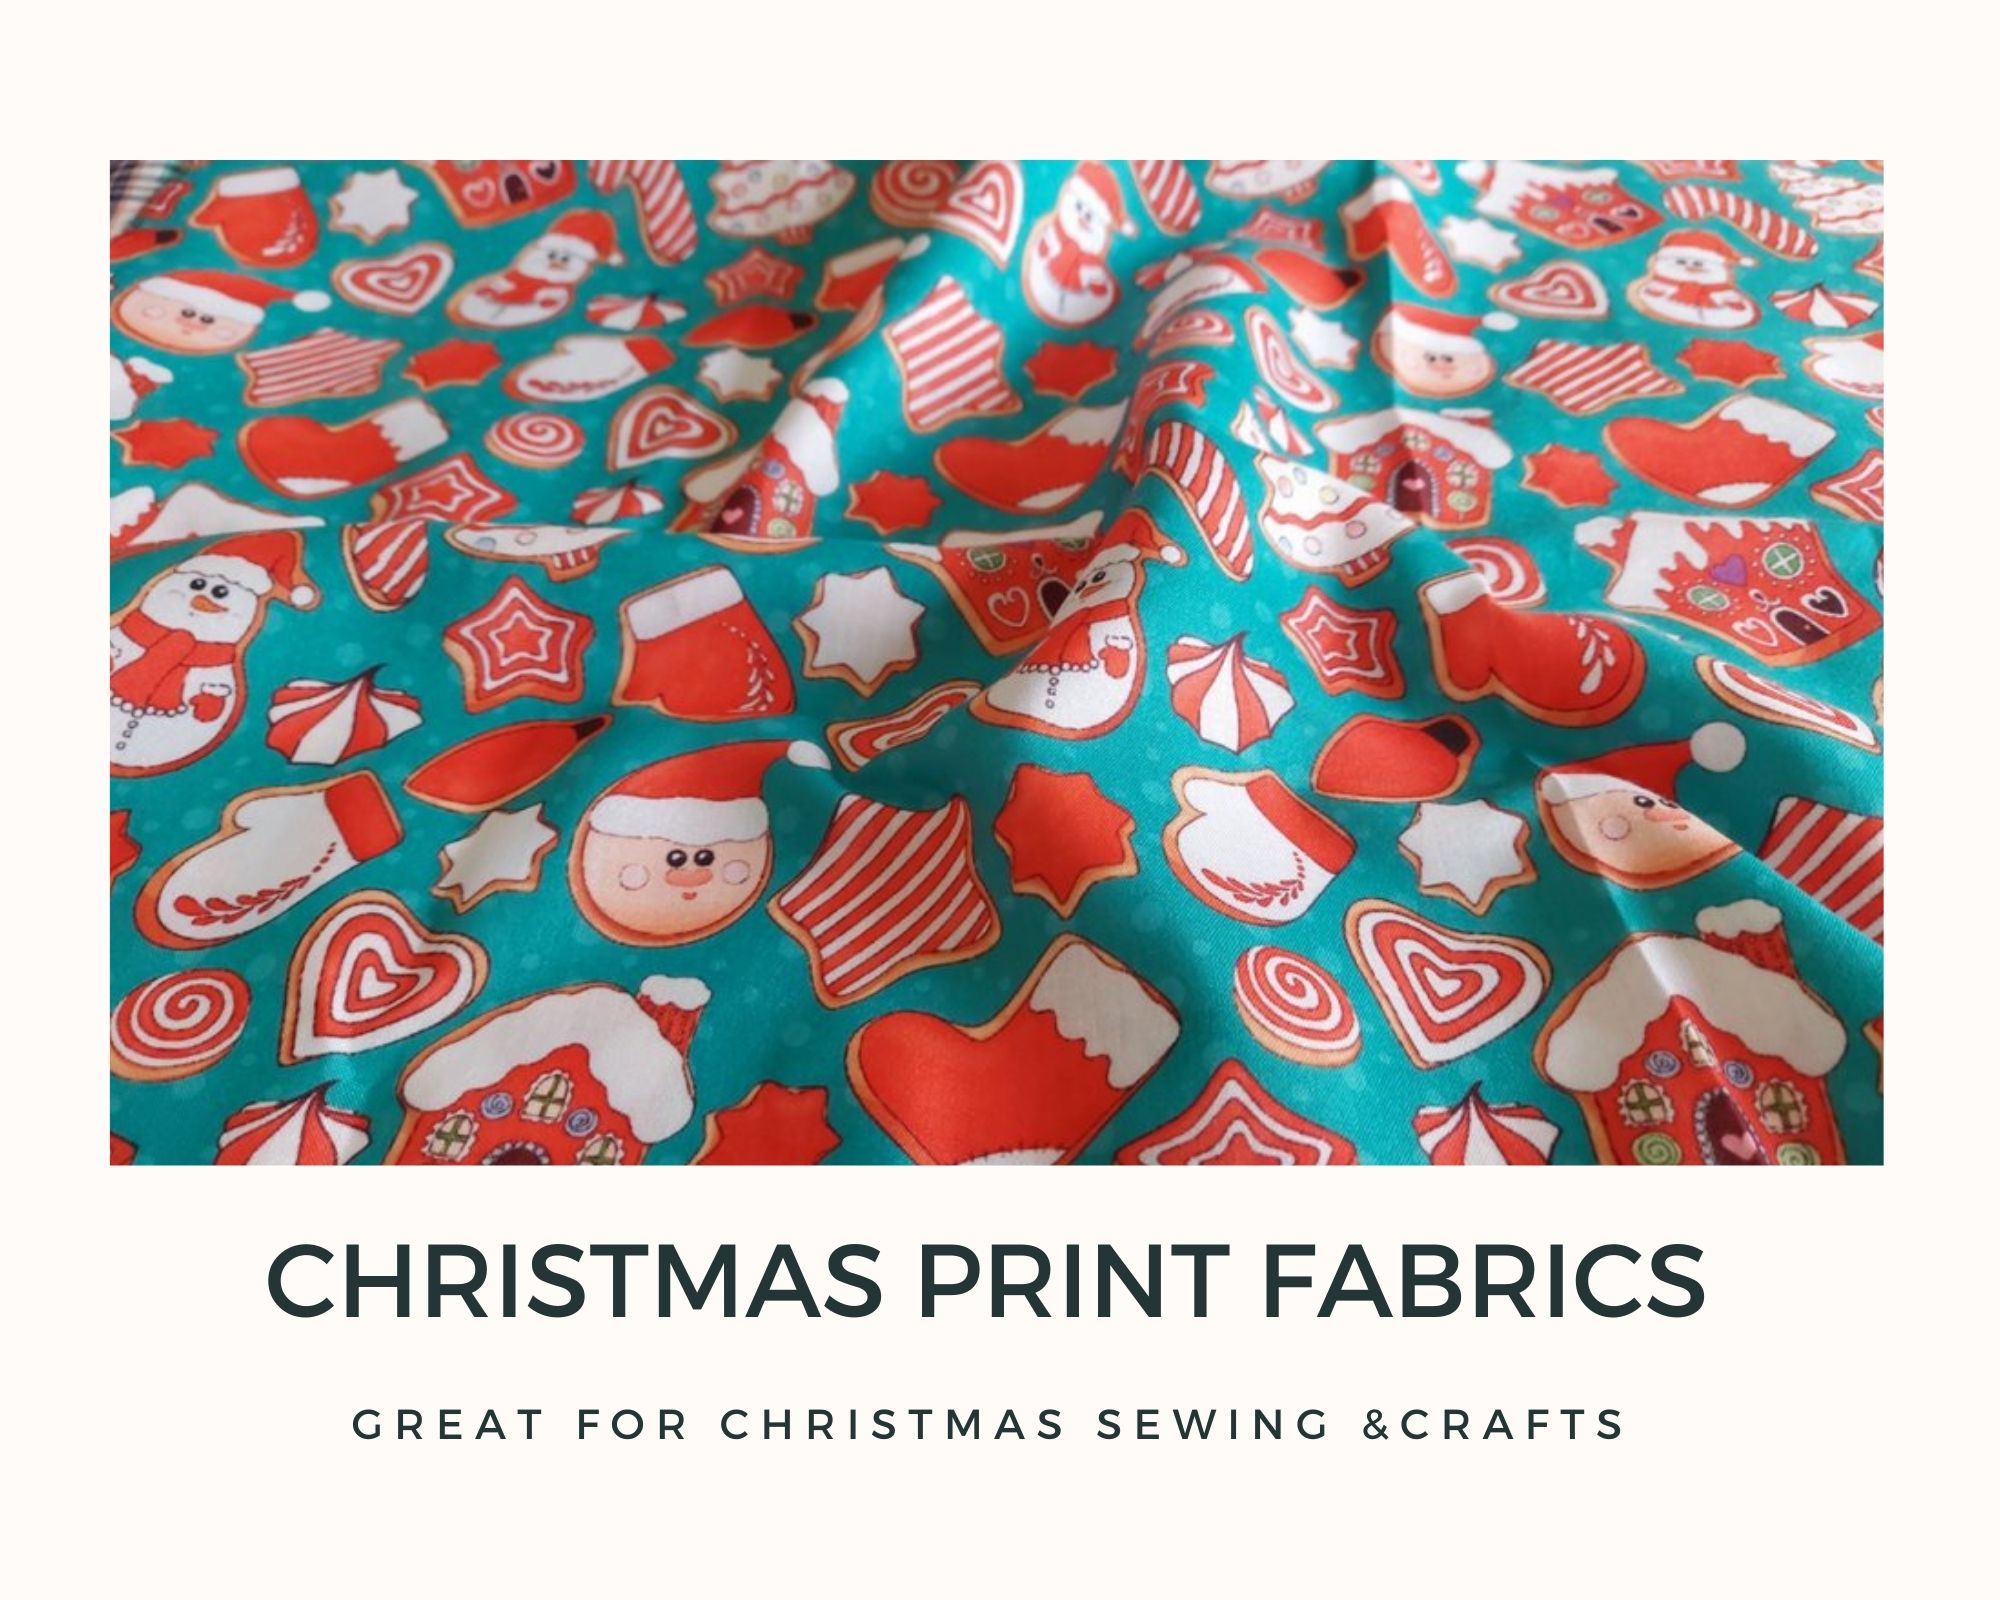 Christmas Print fabric in Christmas themes like Santa, holly leaves, stockings and holiday prints.